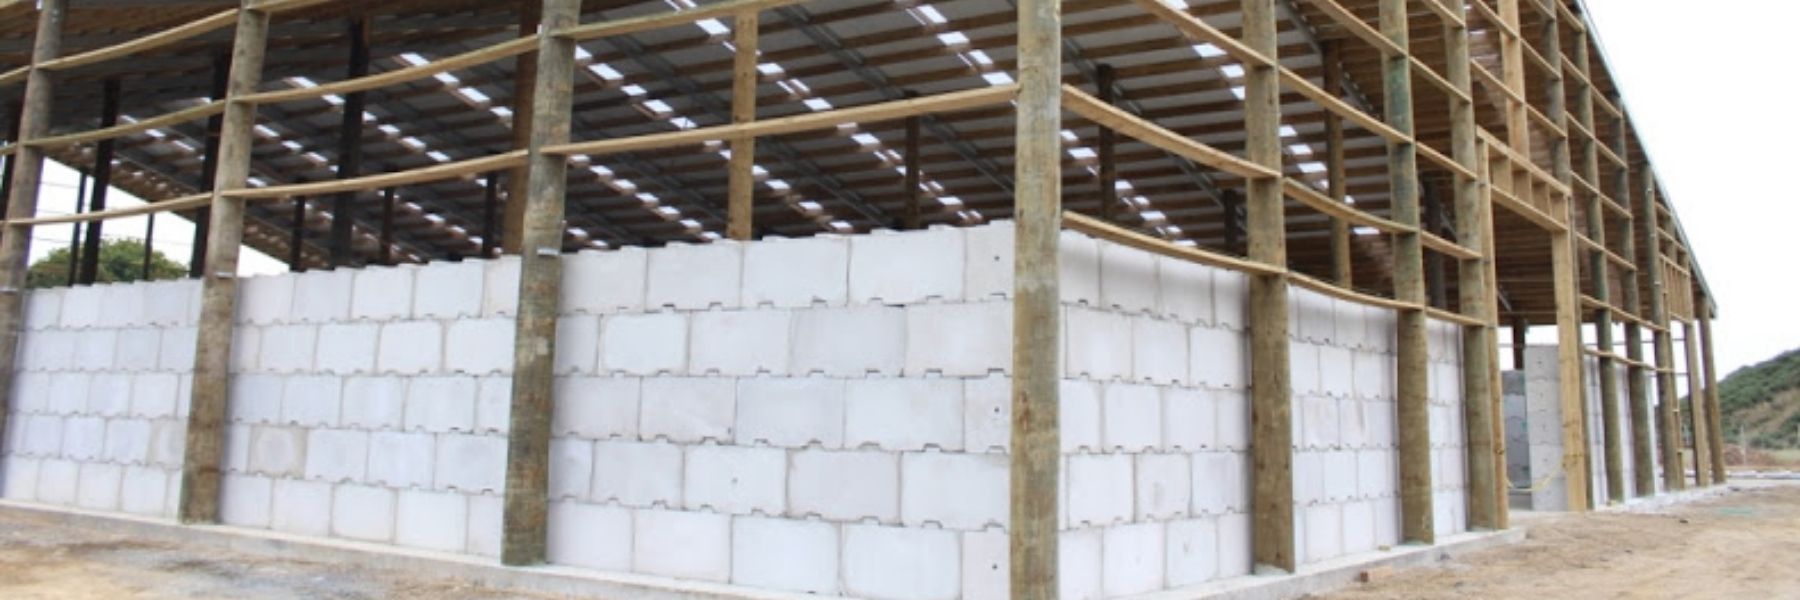 Interbloc concrete blocks for Ballance Agri-Nutrients